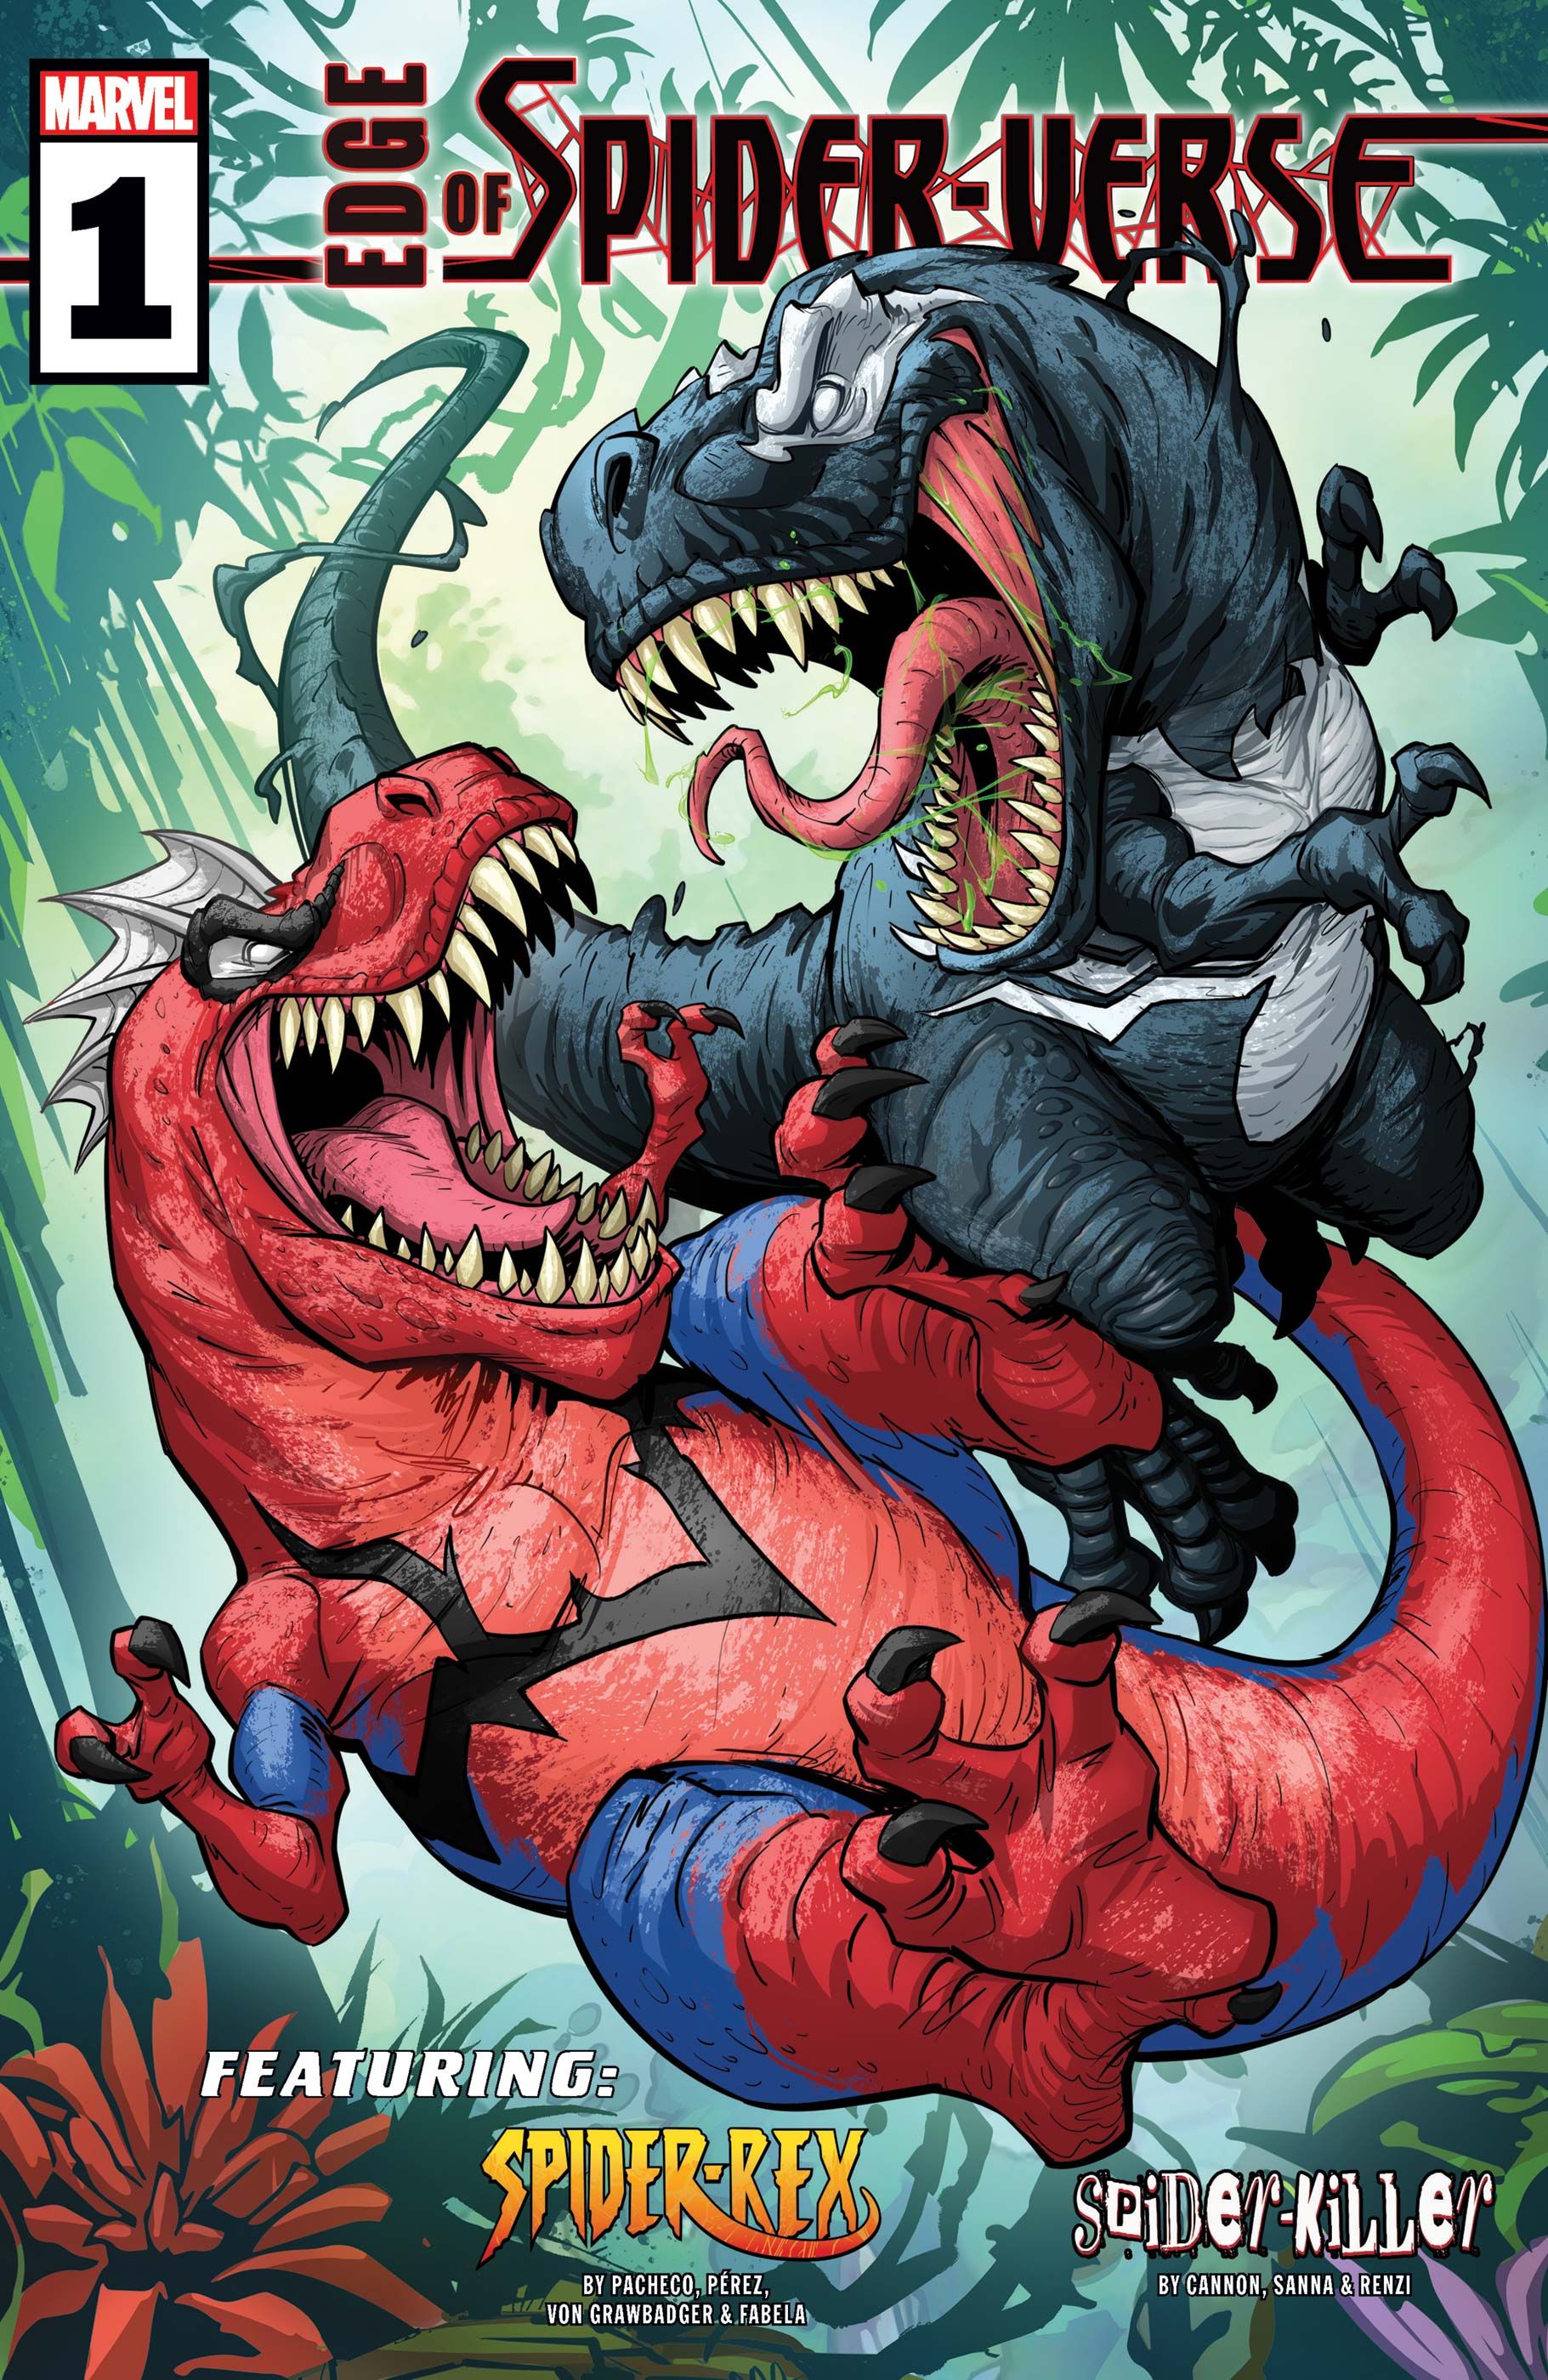 Spider-Rex and Spider-killer Venomsaurus battling each other